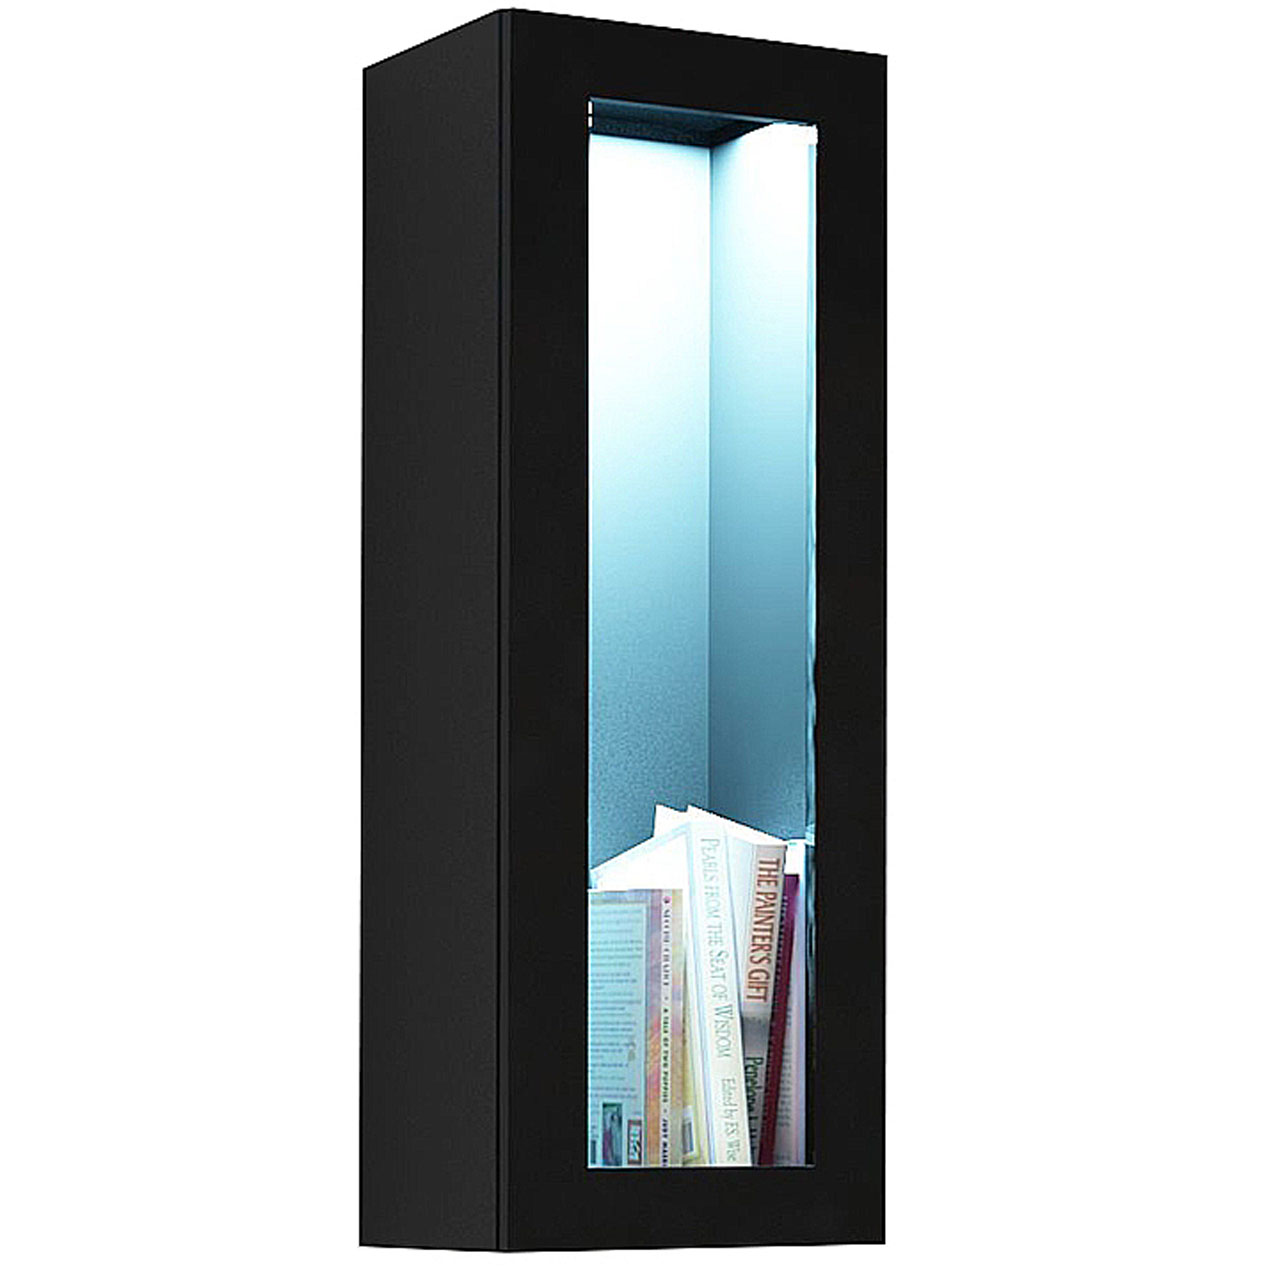 Wall display cabinet 90 VIGO VG6D black / black gloss